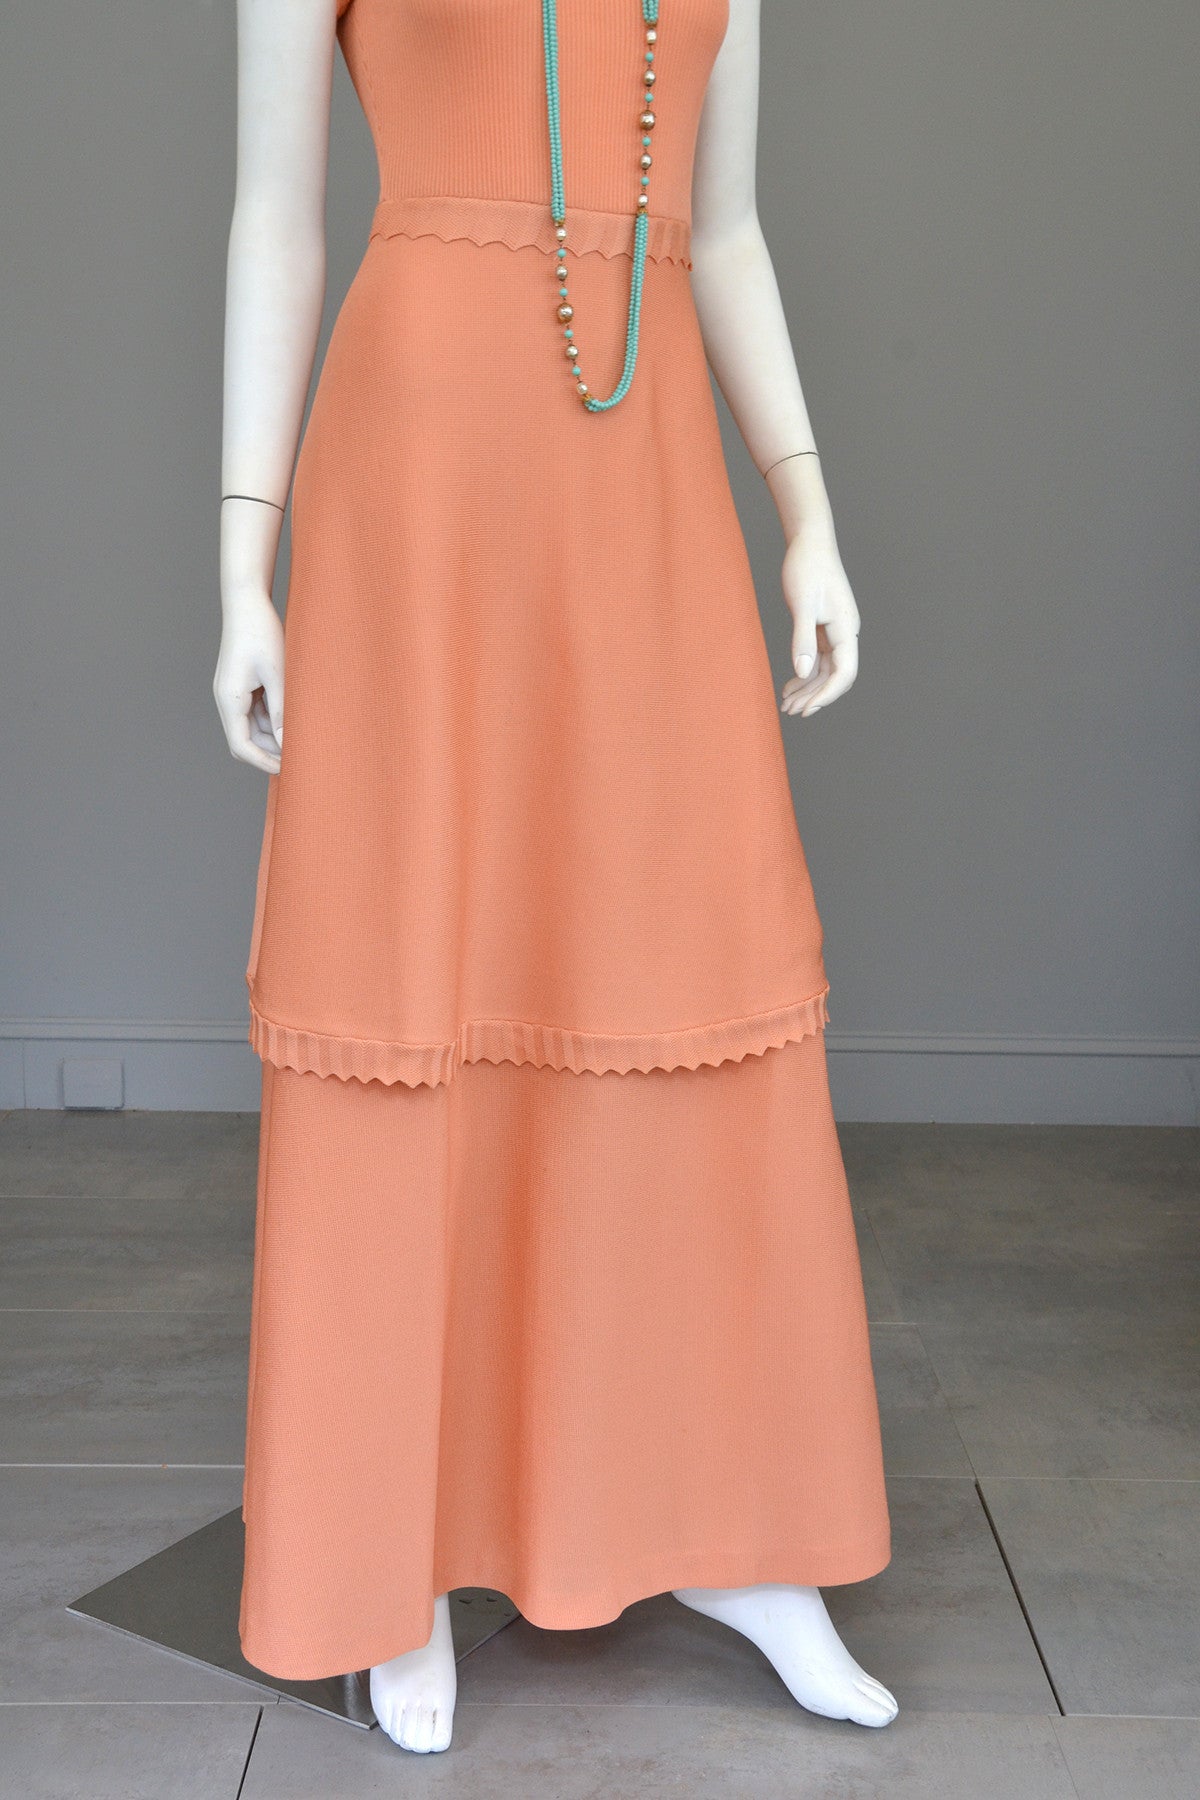 1970s Light Coral Italian Knit Dress with Long Peplum Skirt